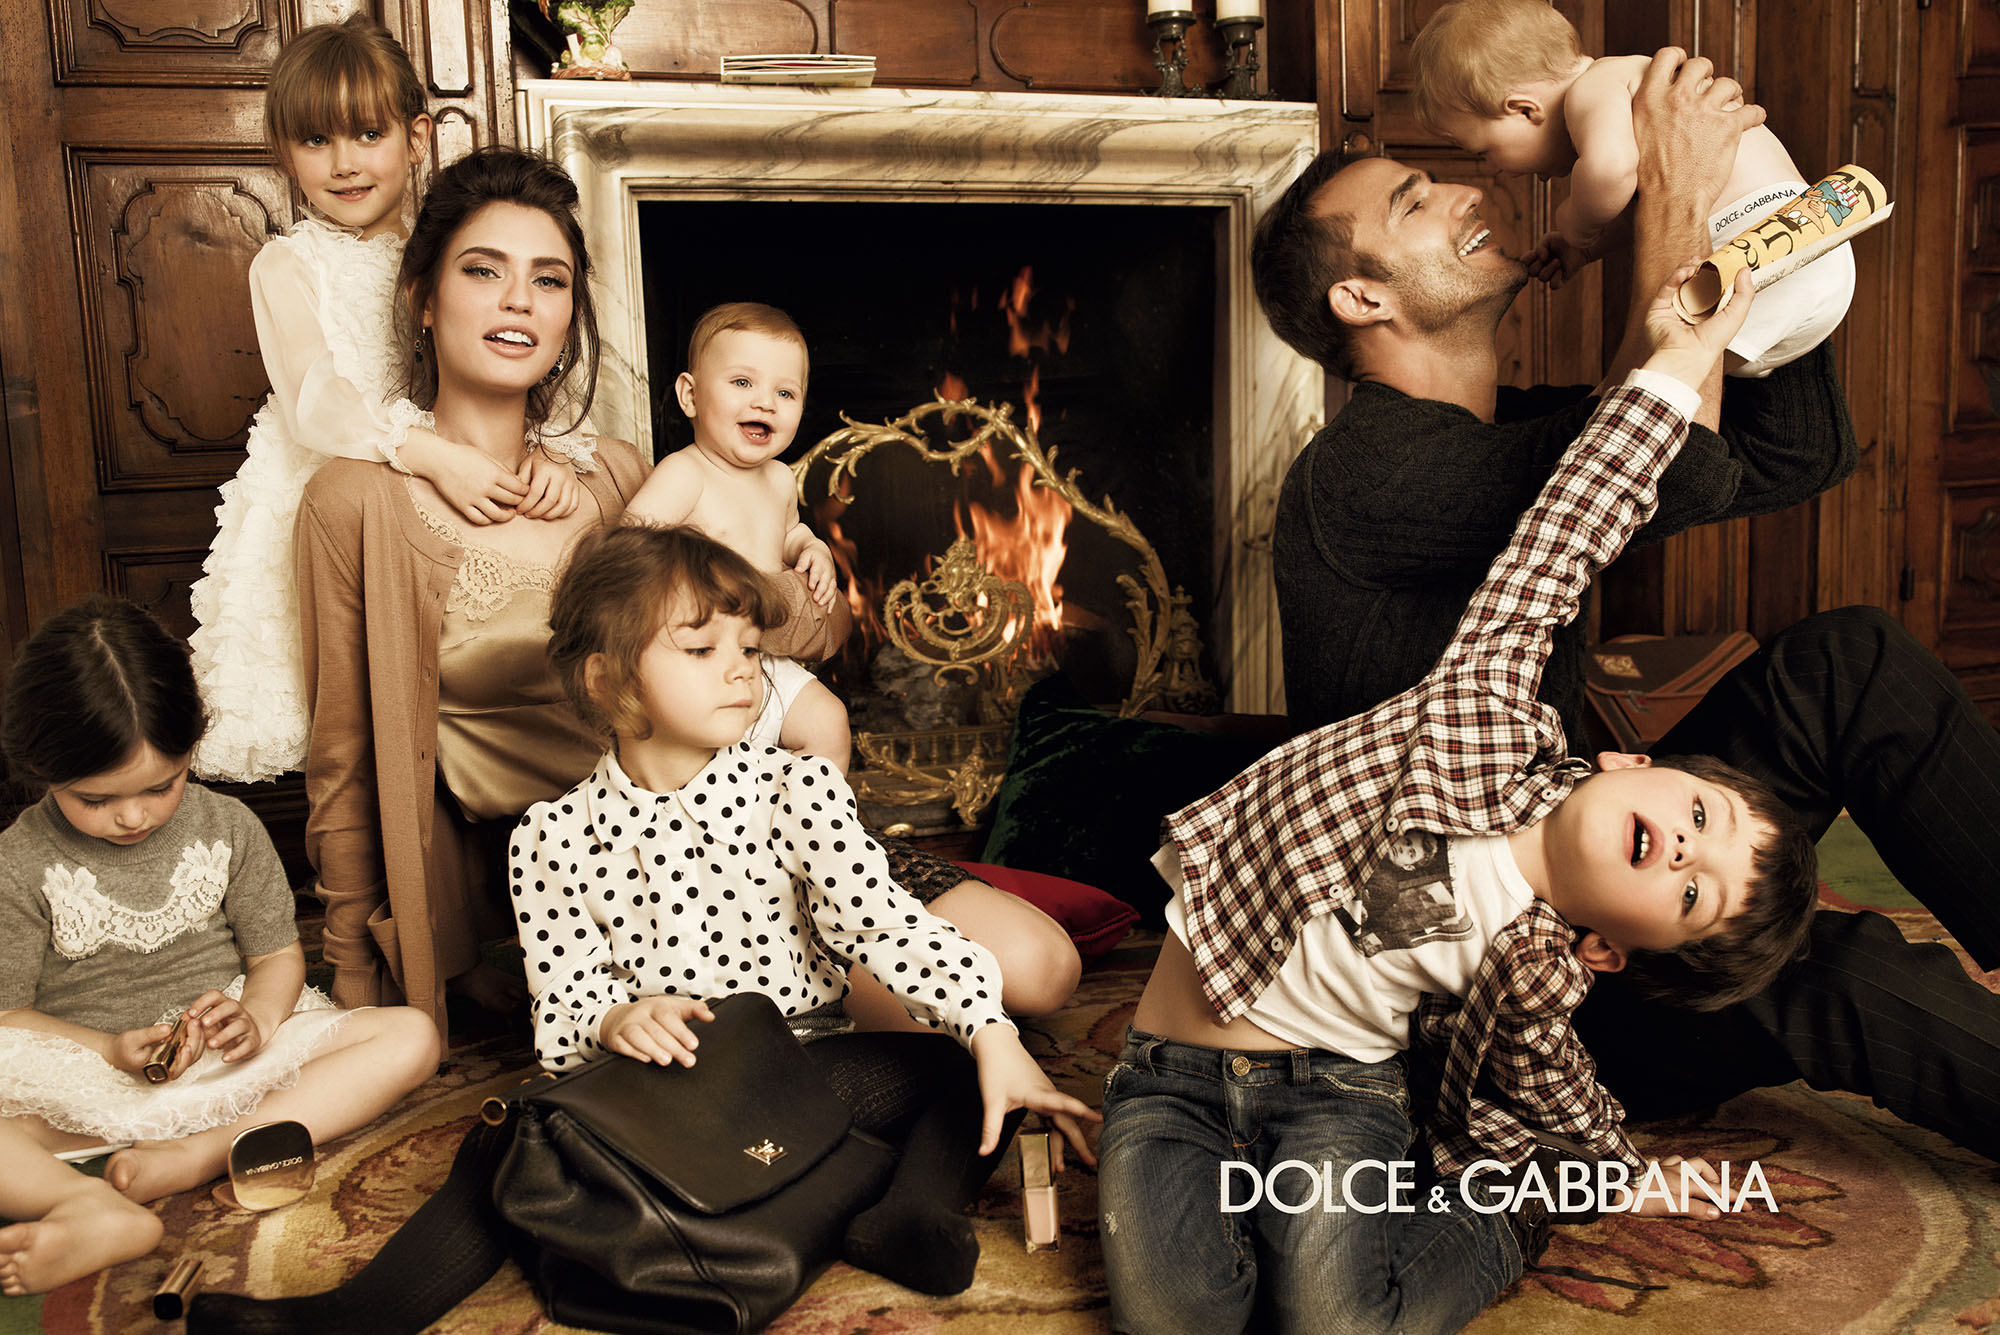 Dolce & Gabbana Backgrounds on Wallpapers Vista